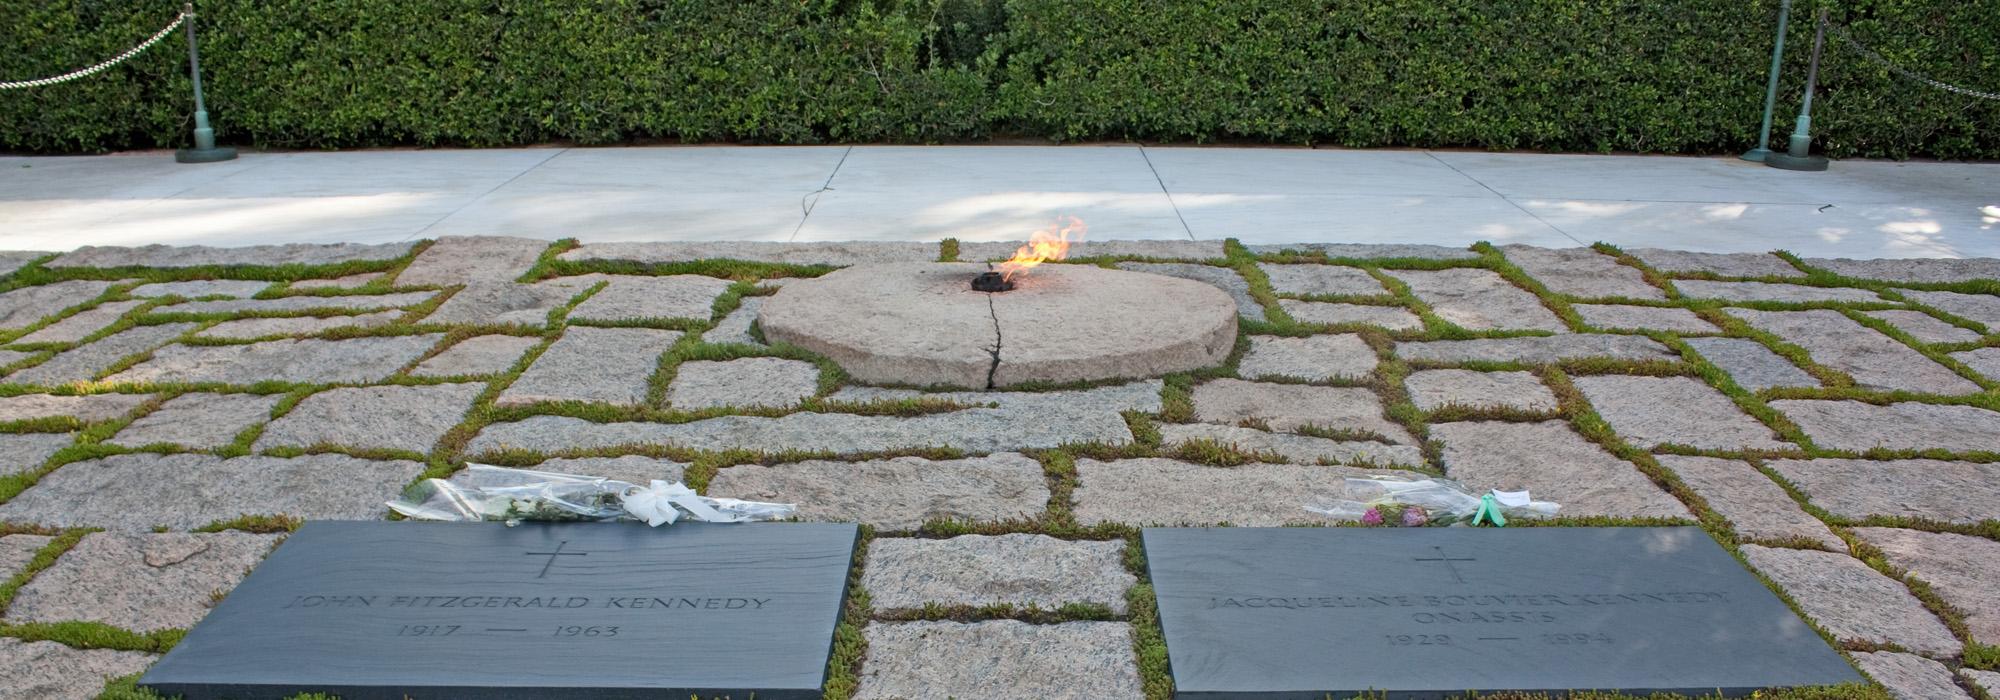 John F. Kennedy Gravesite, Washington, DC